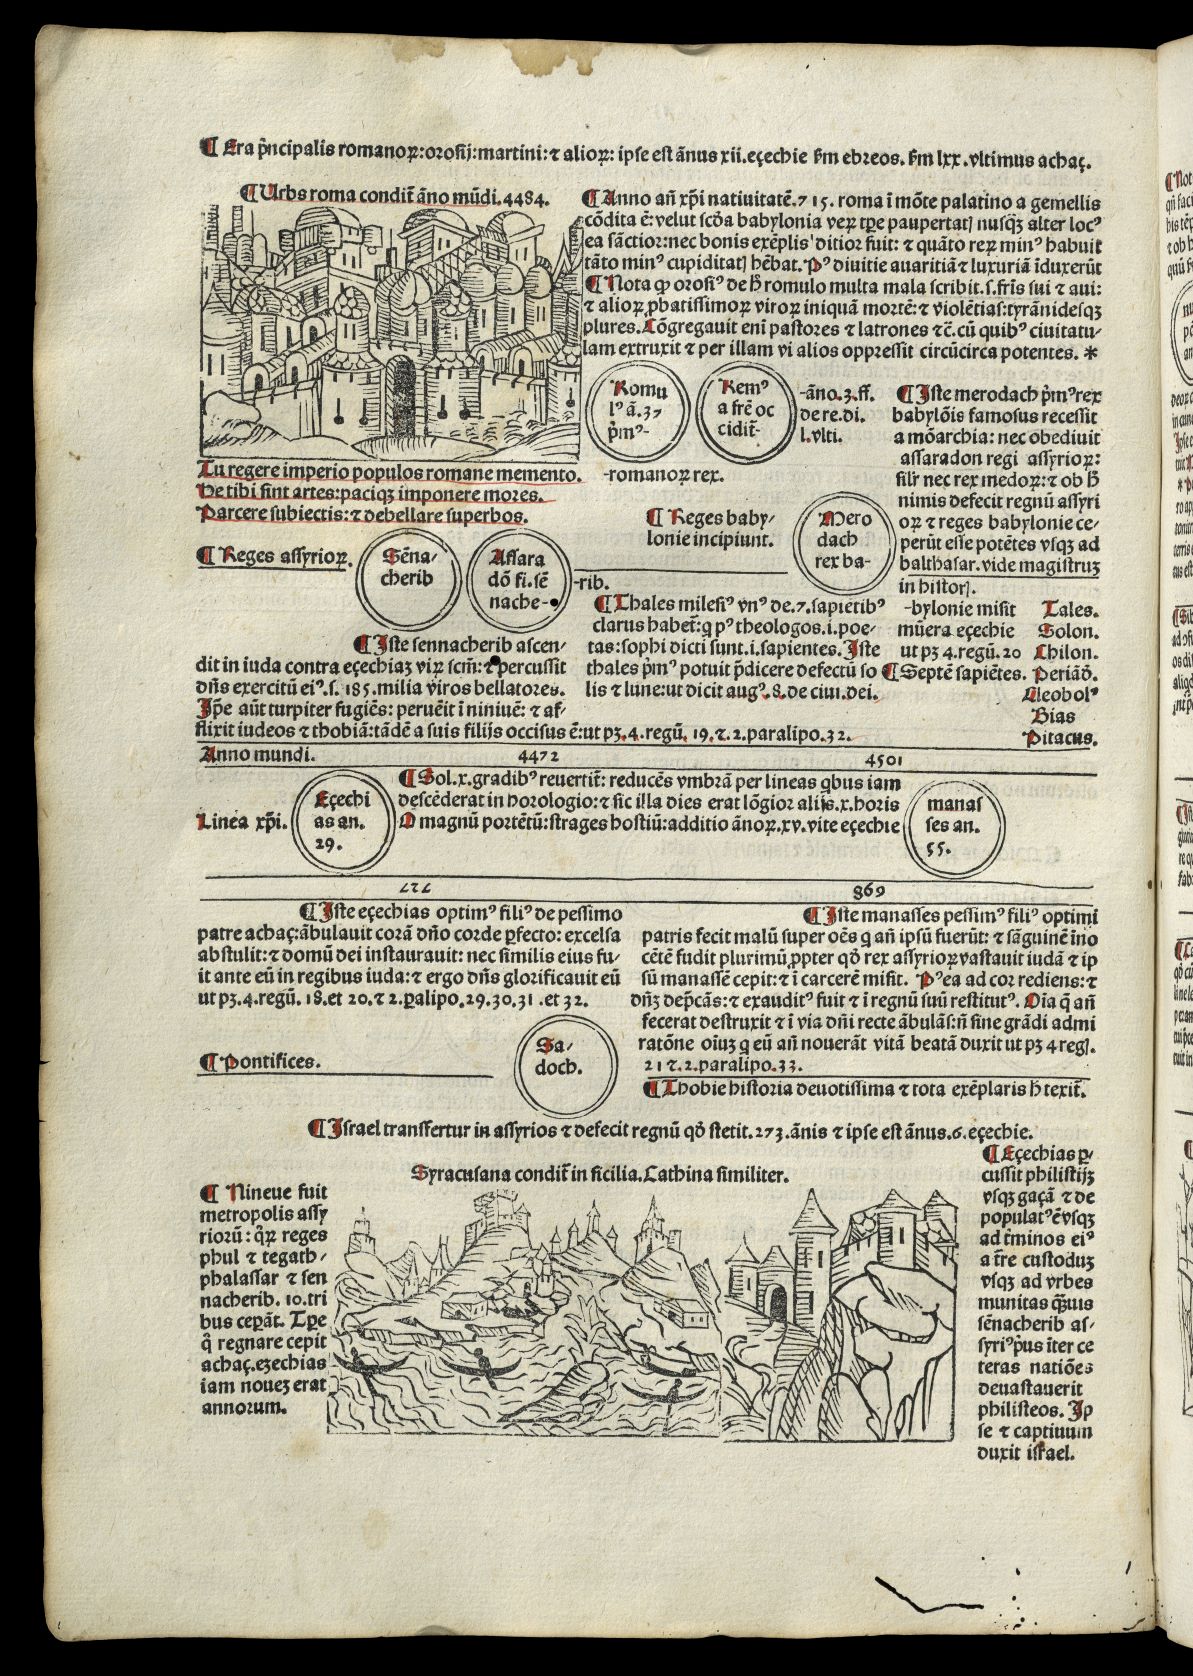 Rom, Syracus und Catania Werner Rolevinck: Fasciculus temporum, Druck: Venedig, Erhard Ratdolt 1484, fol. 13v